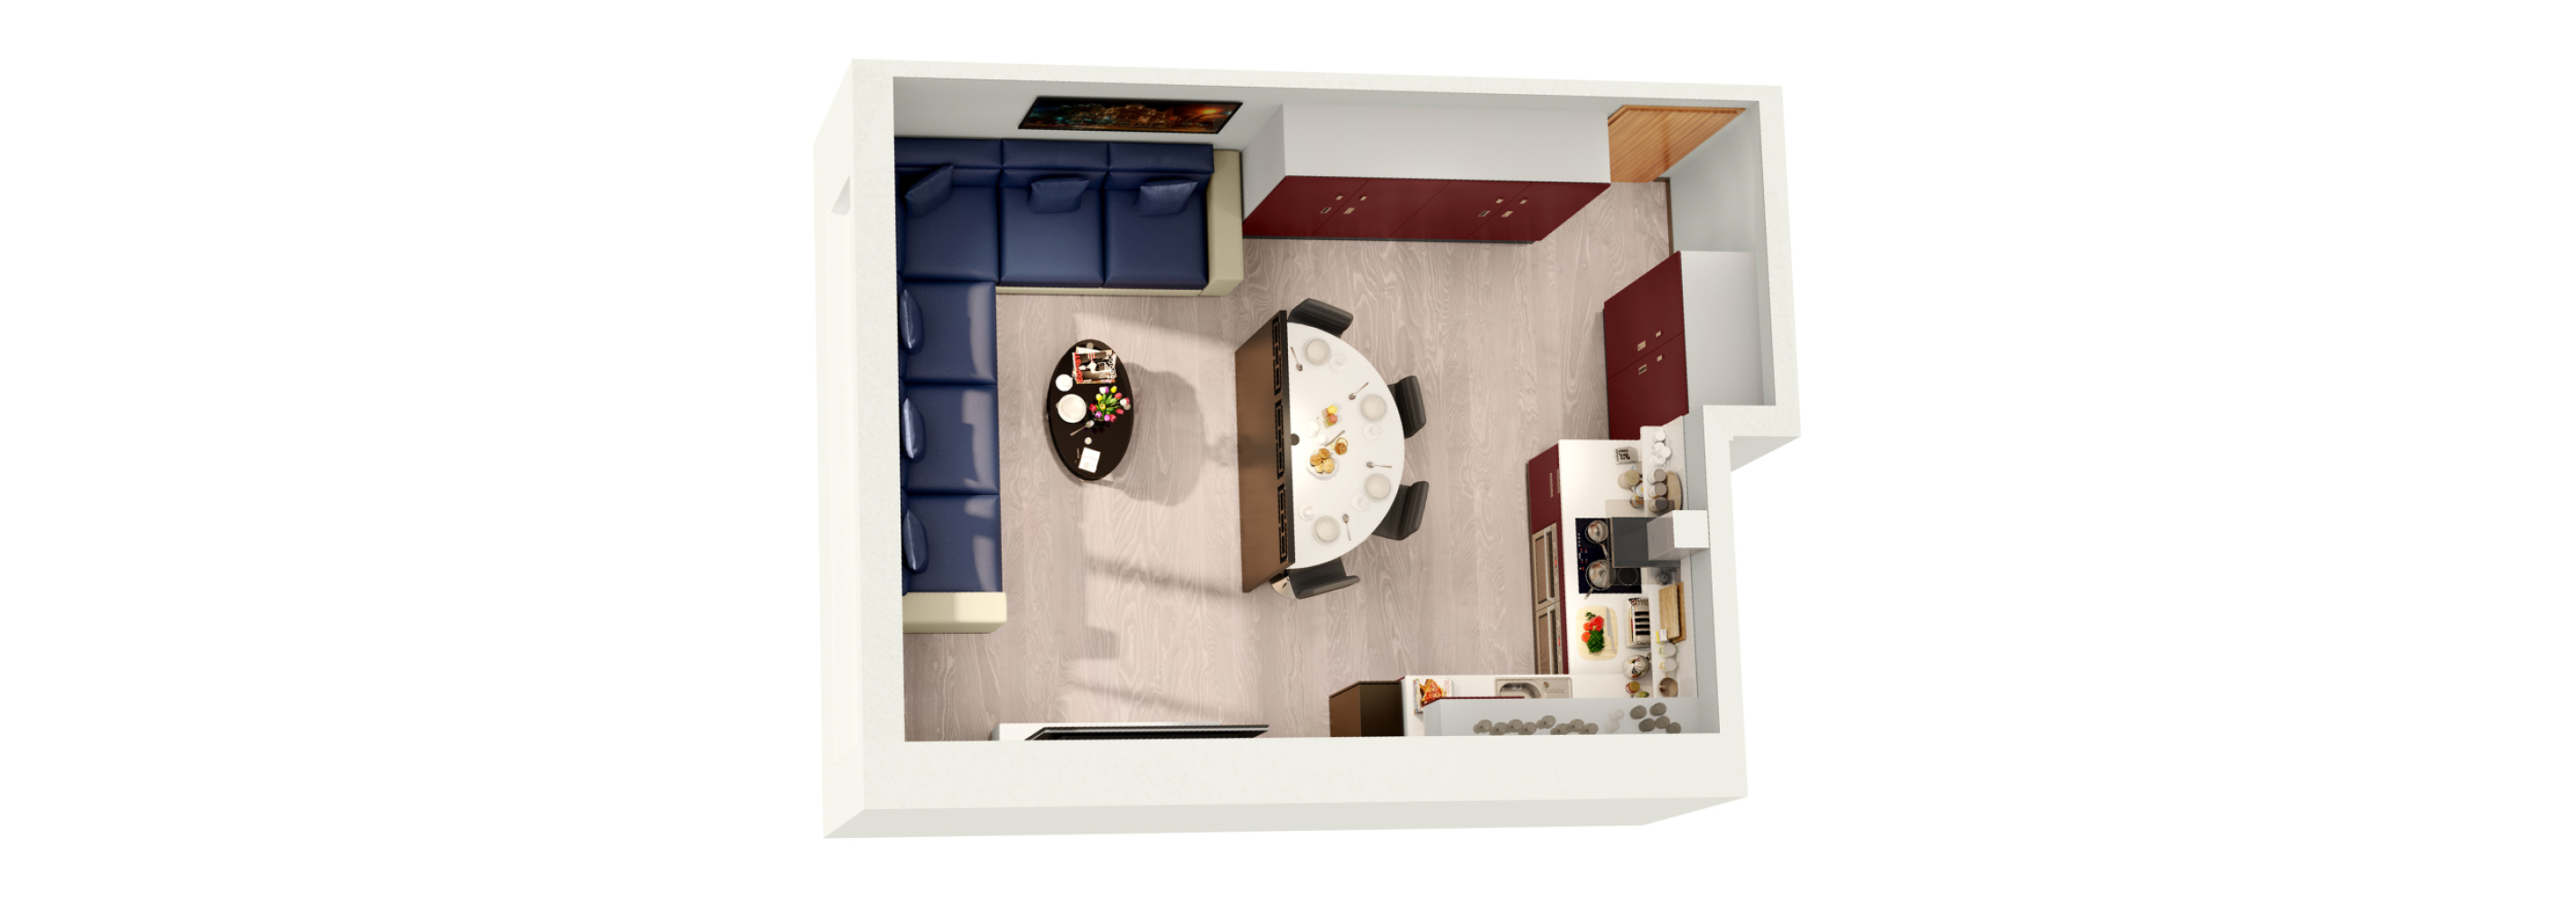 3D floorplan Luxe lounge